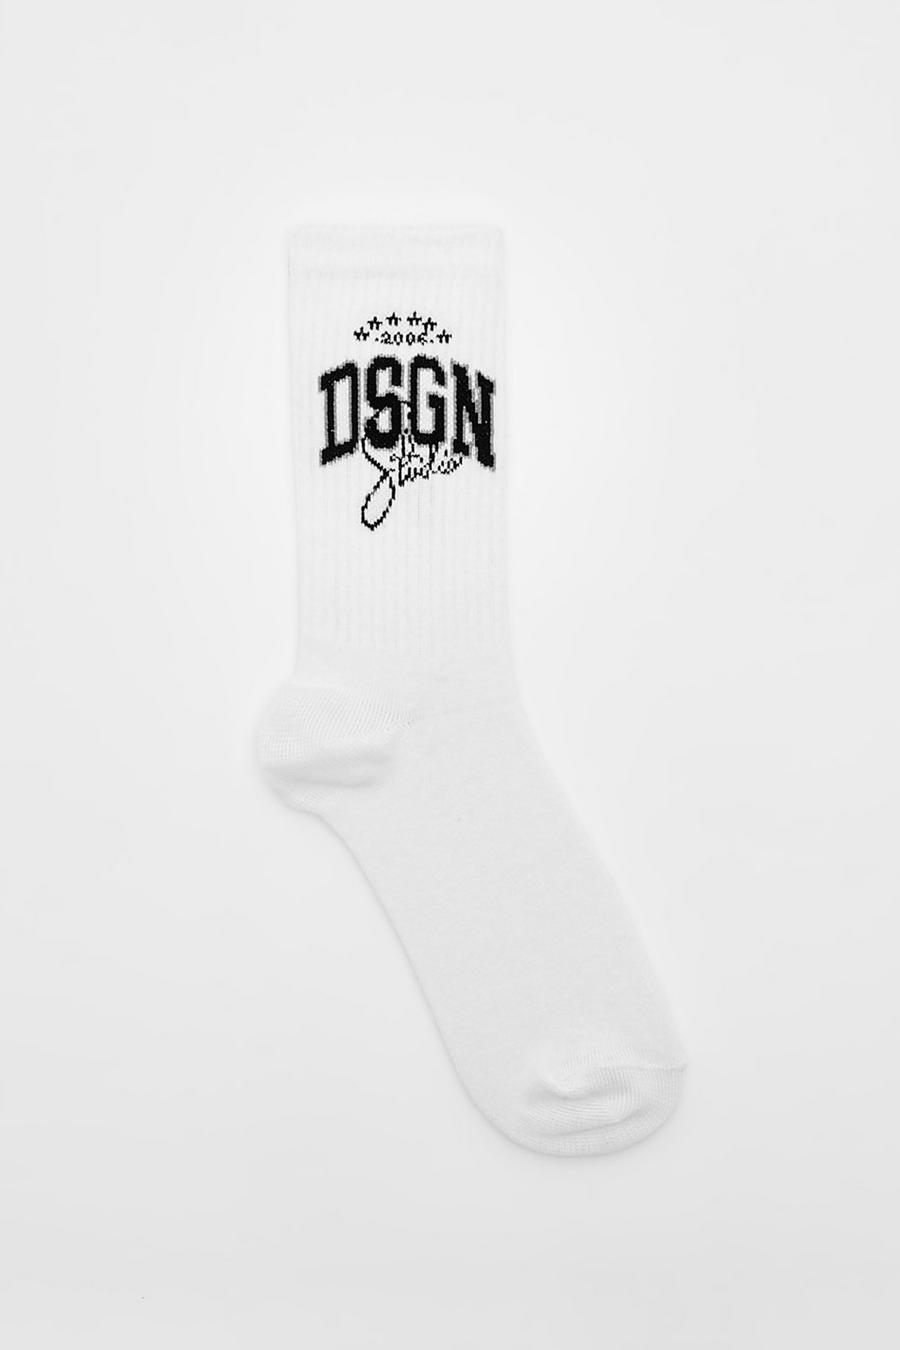 Dsgn Studio Sports Socken, White image number 1